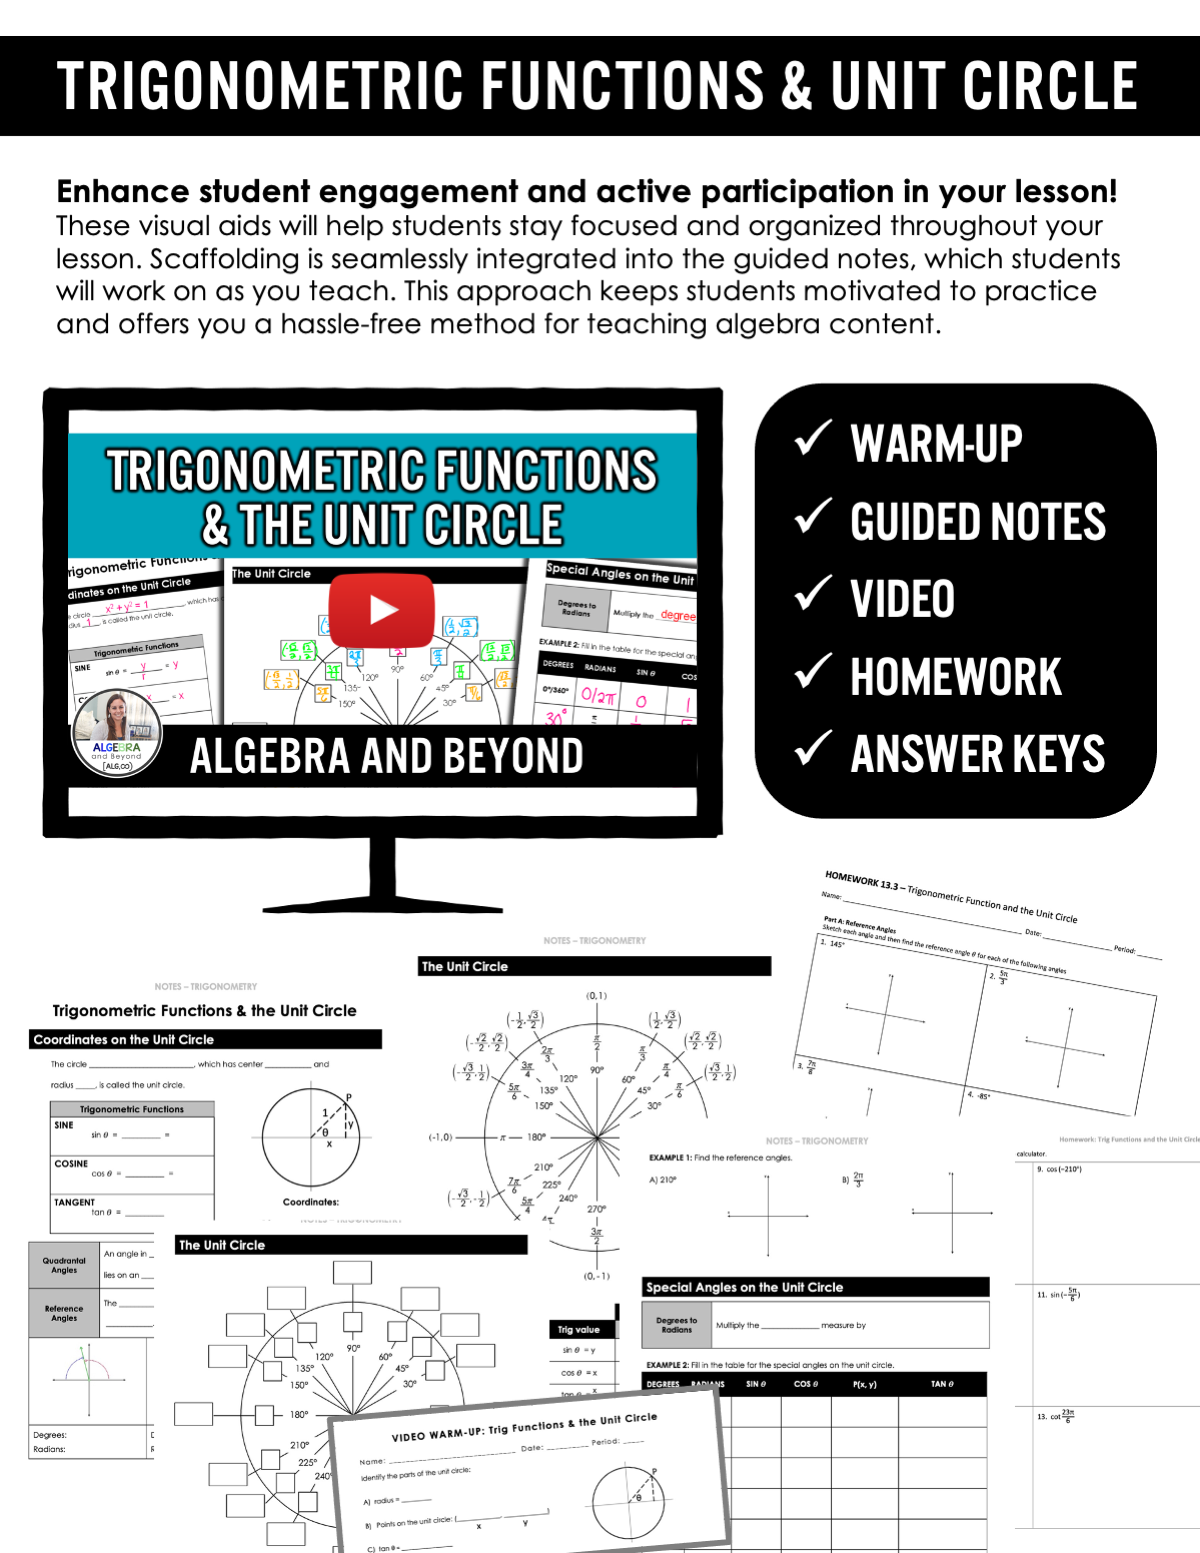 Trigonometric Functions and Unit Circle | Algebra 2 | Video | Notes | Homework